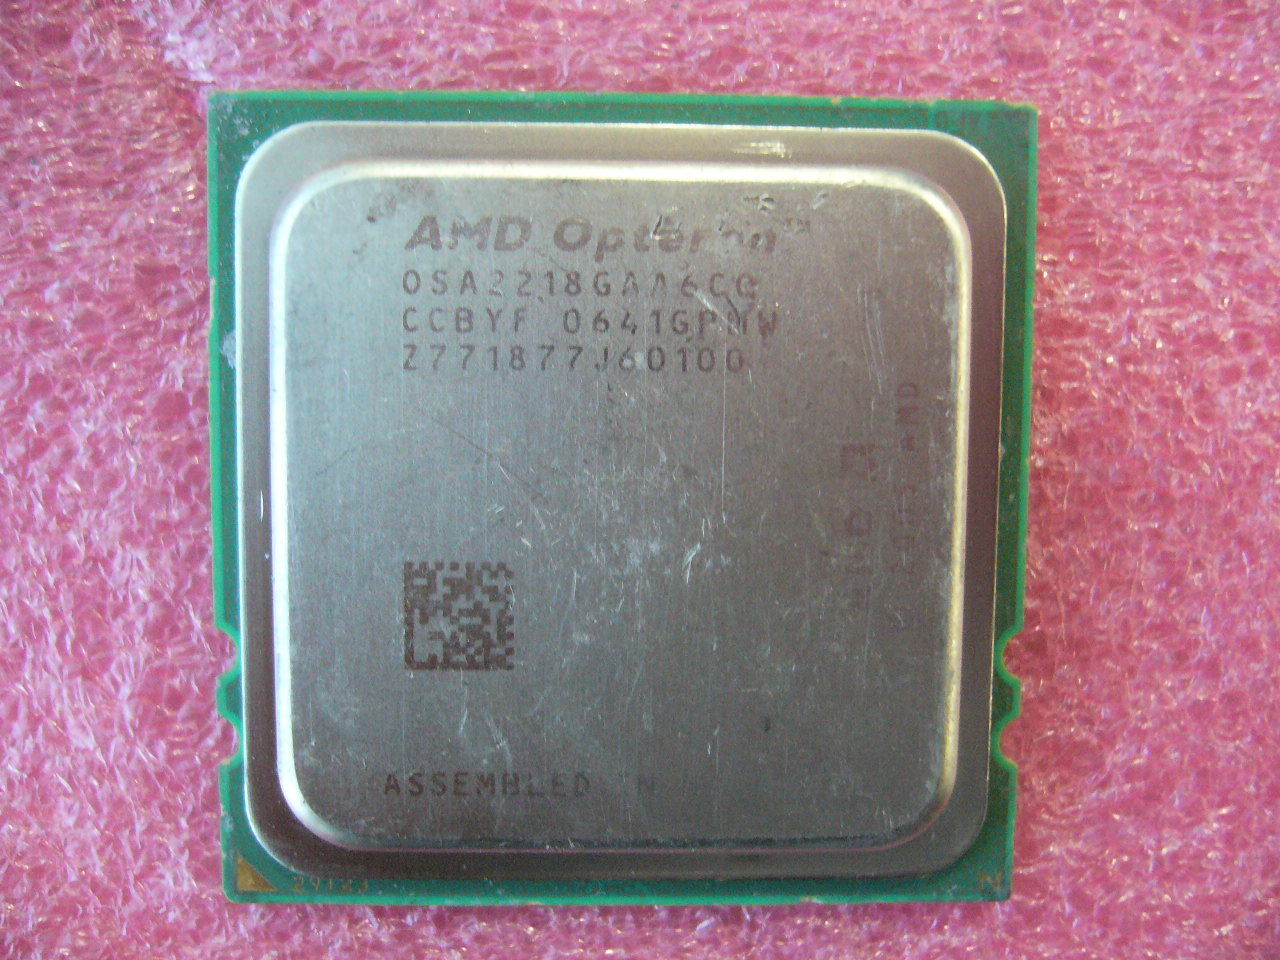 QTY 1x AMD OSA2218GAA6CQ Opteron 2218 2.6 GHz Dual Core CPU Socket F 1207